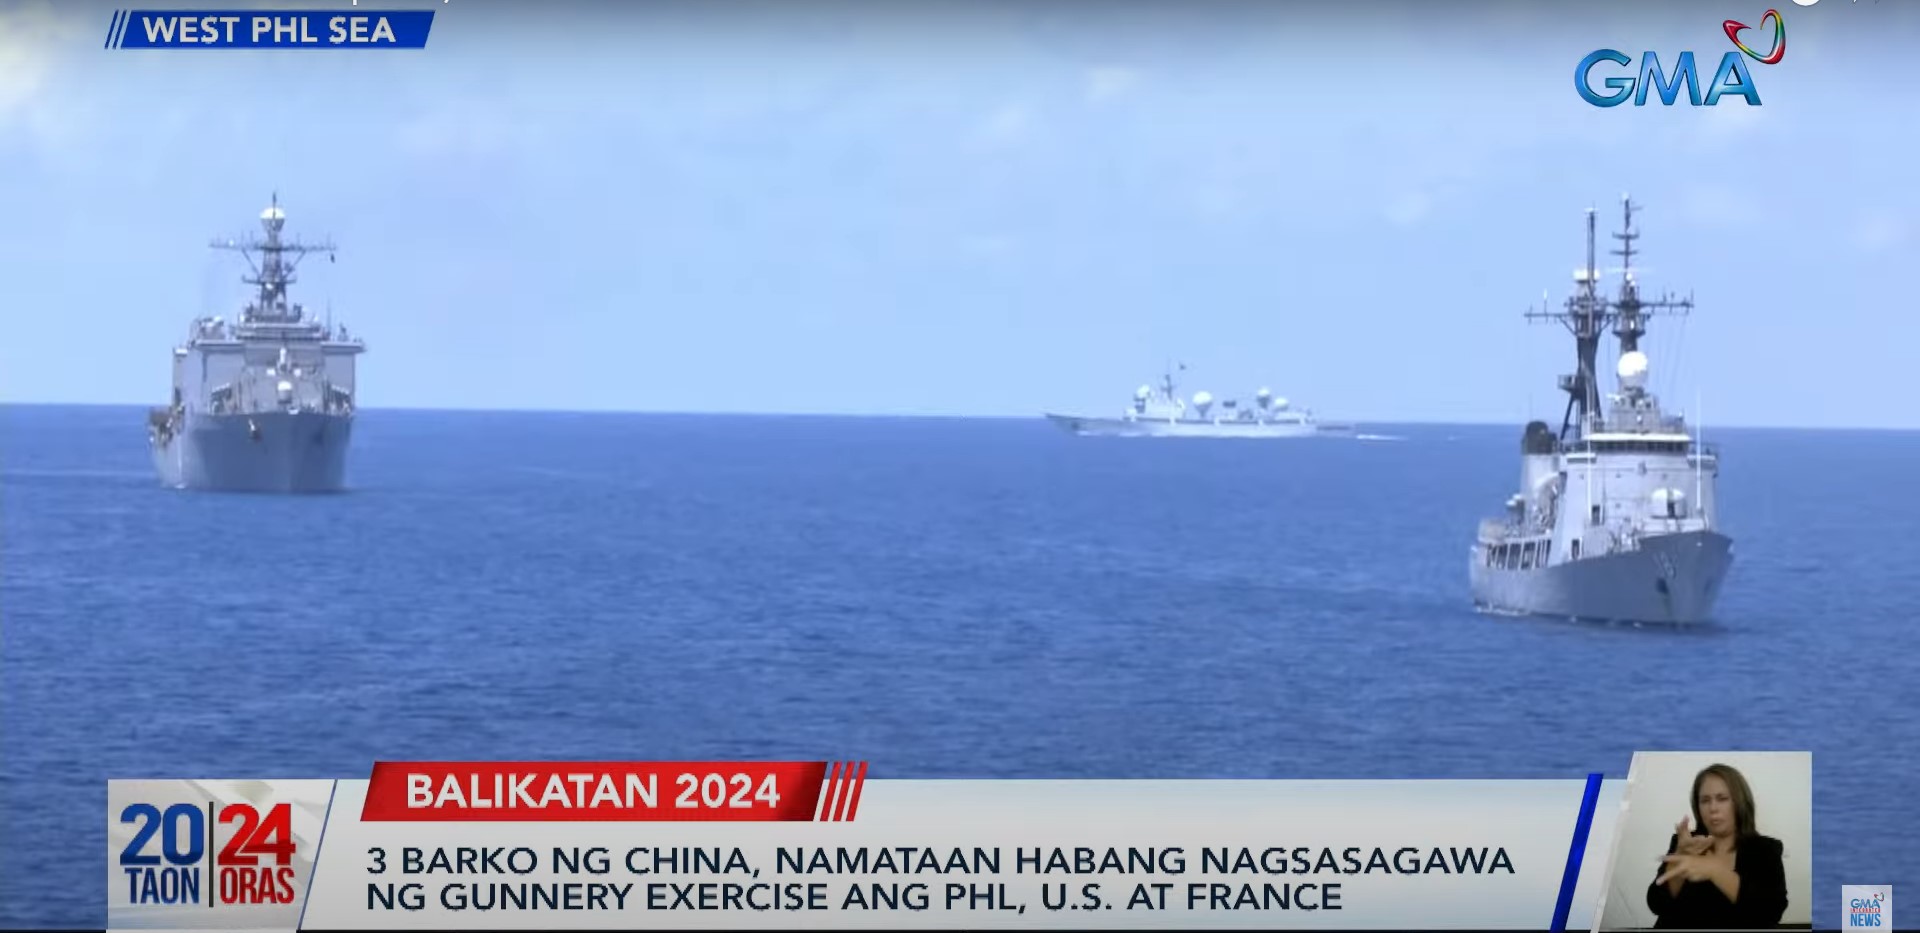 china warships violated notam during ph-us-france wps exercise —balikatan exec